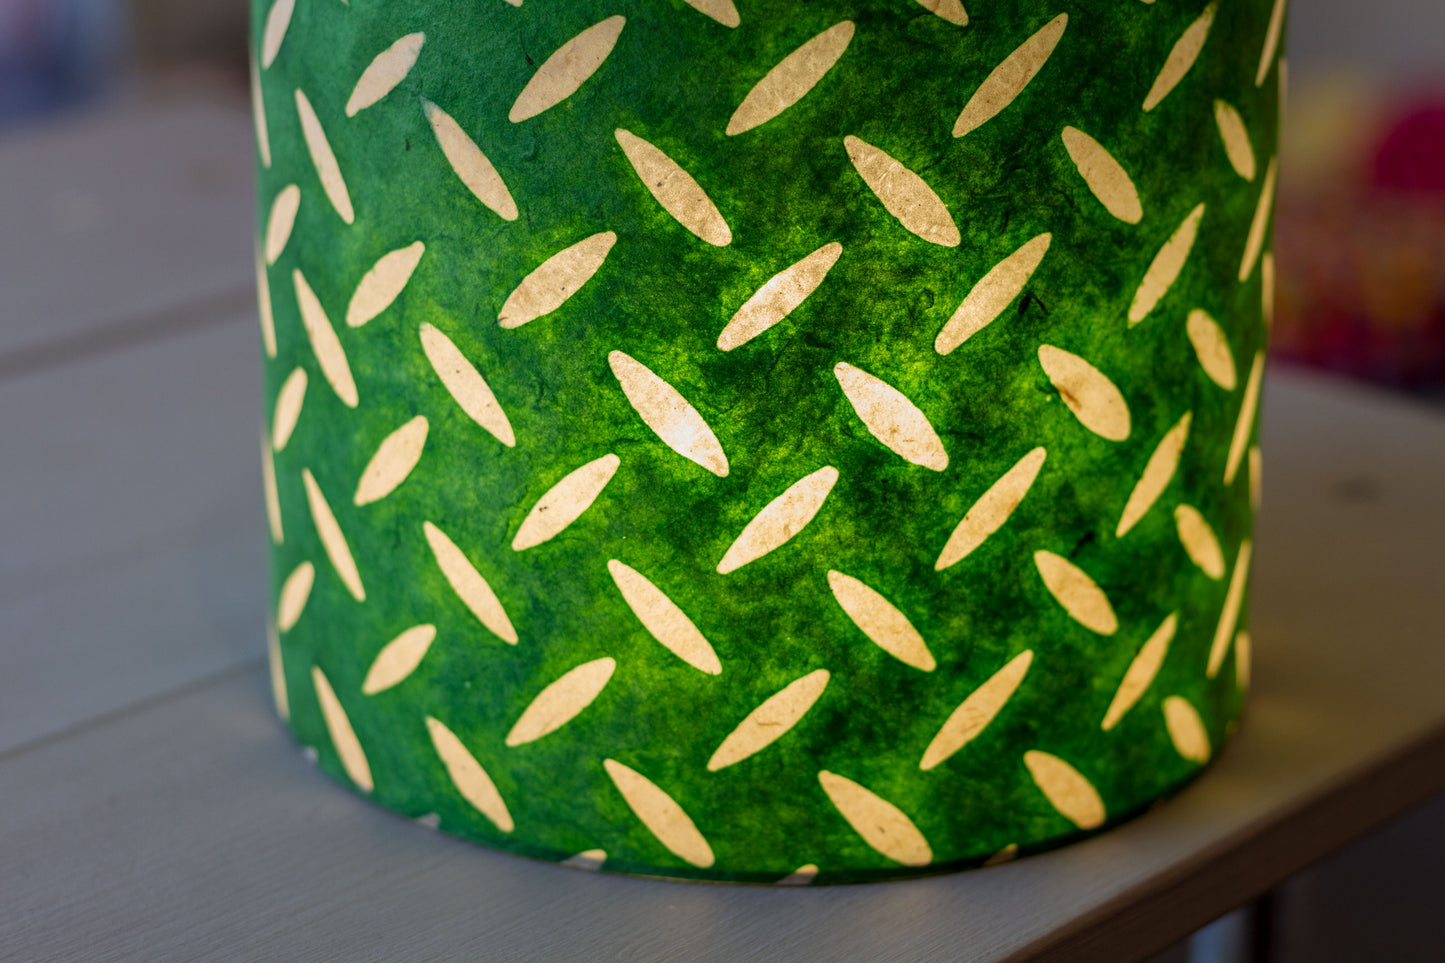 Oval Lamp Shade - P96 - Batik Tread Plate Green, 30cm(w) x 30cm(h) x 22cm(d)